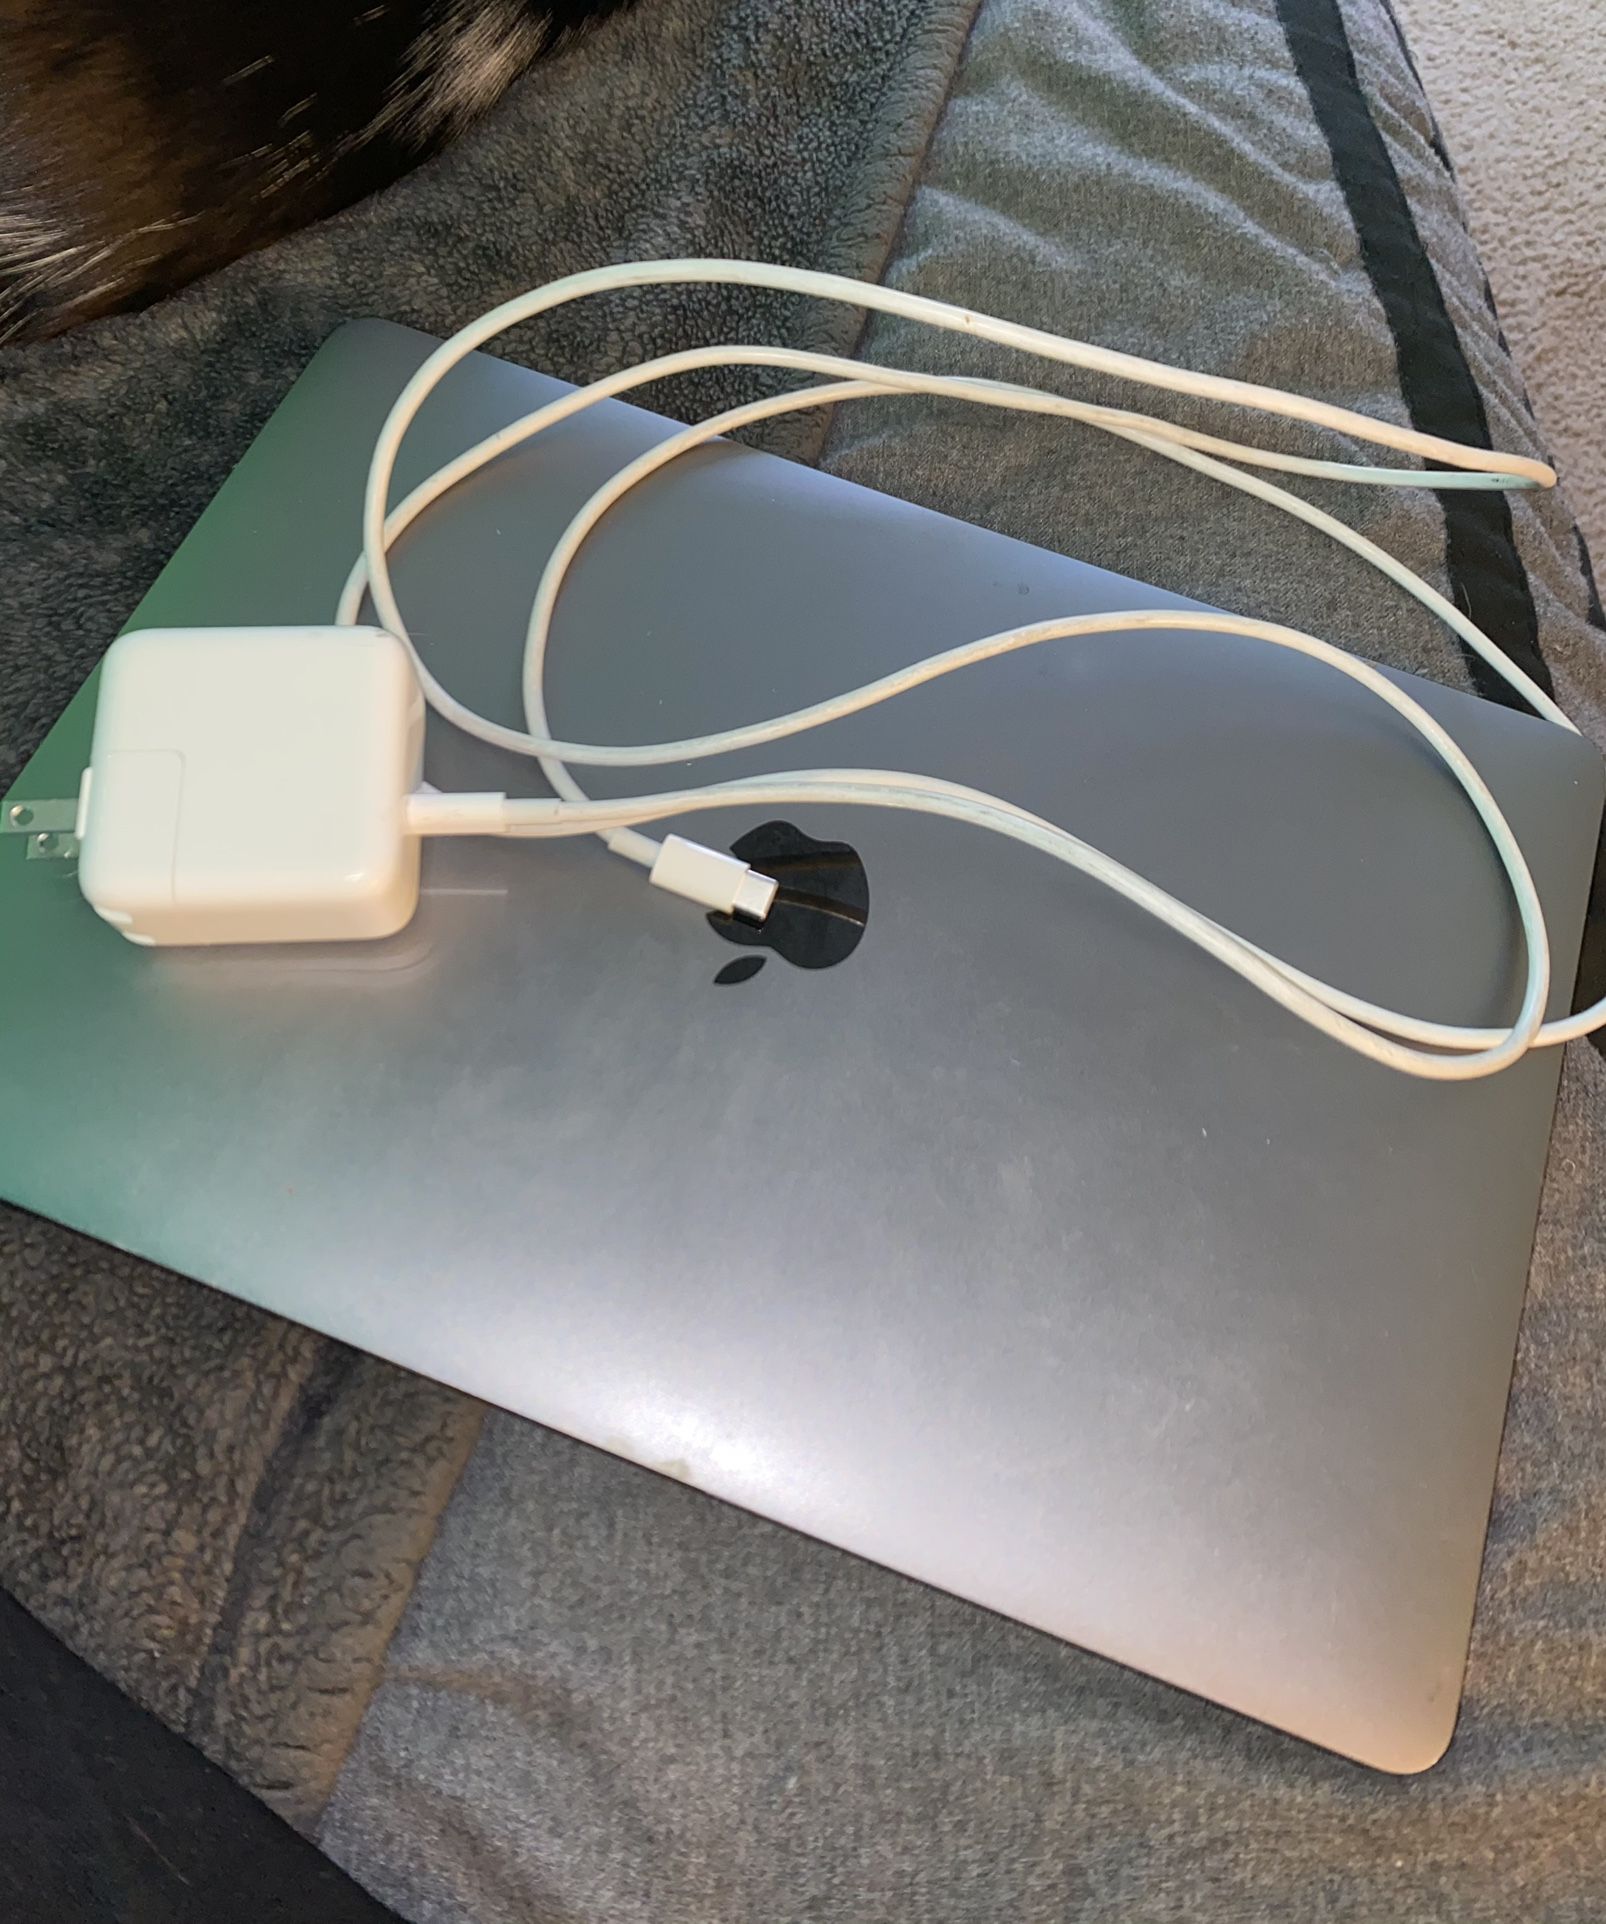 MacBook Pro 13’ 8GB Space Gray Retina Display